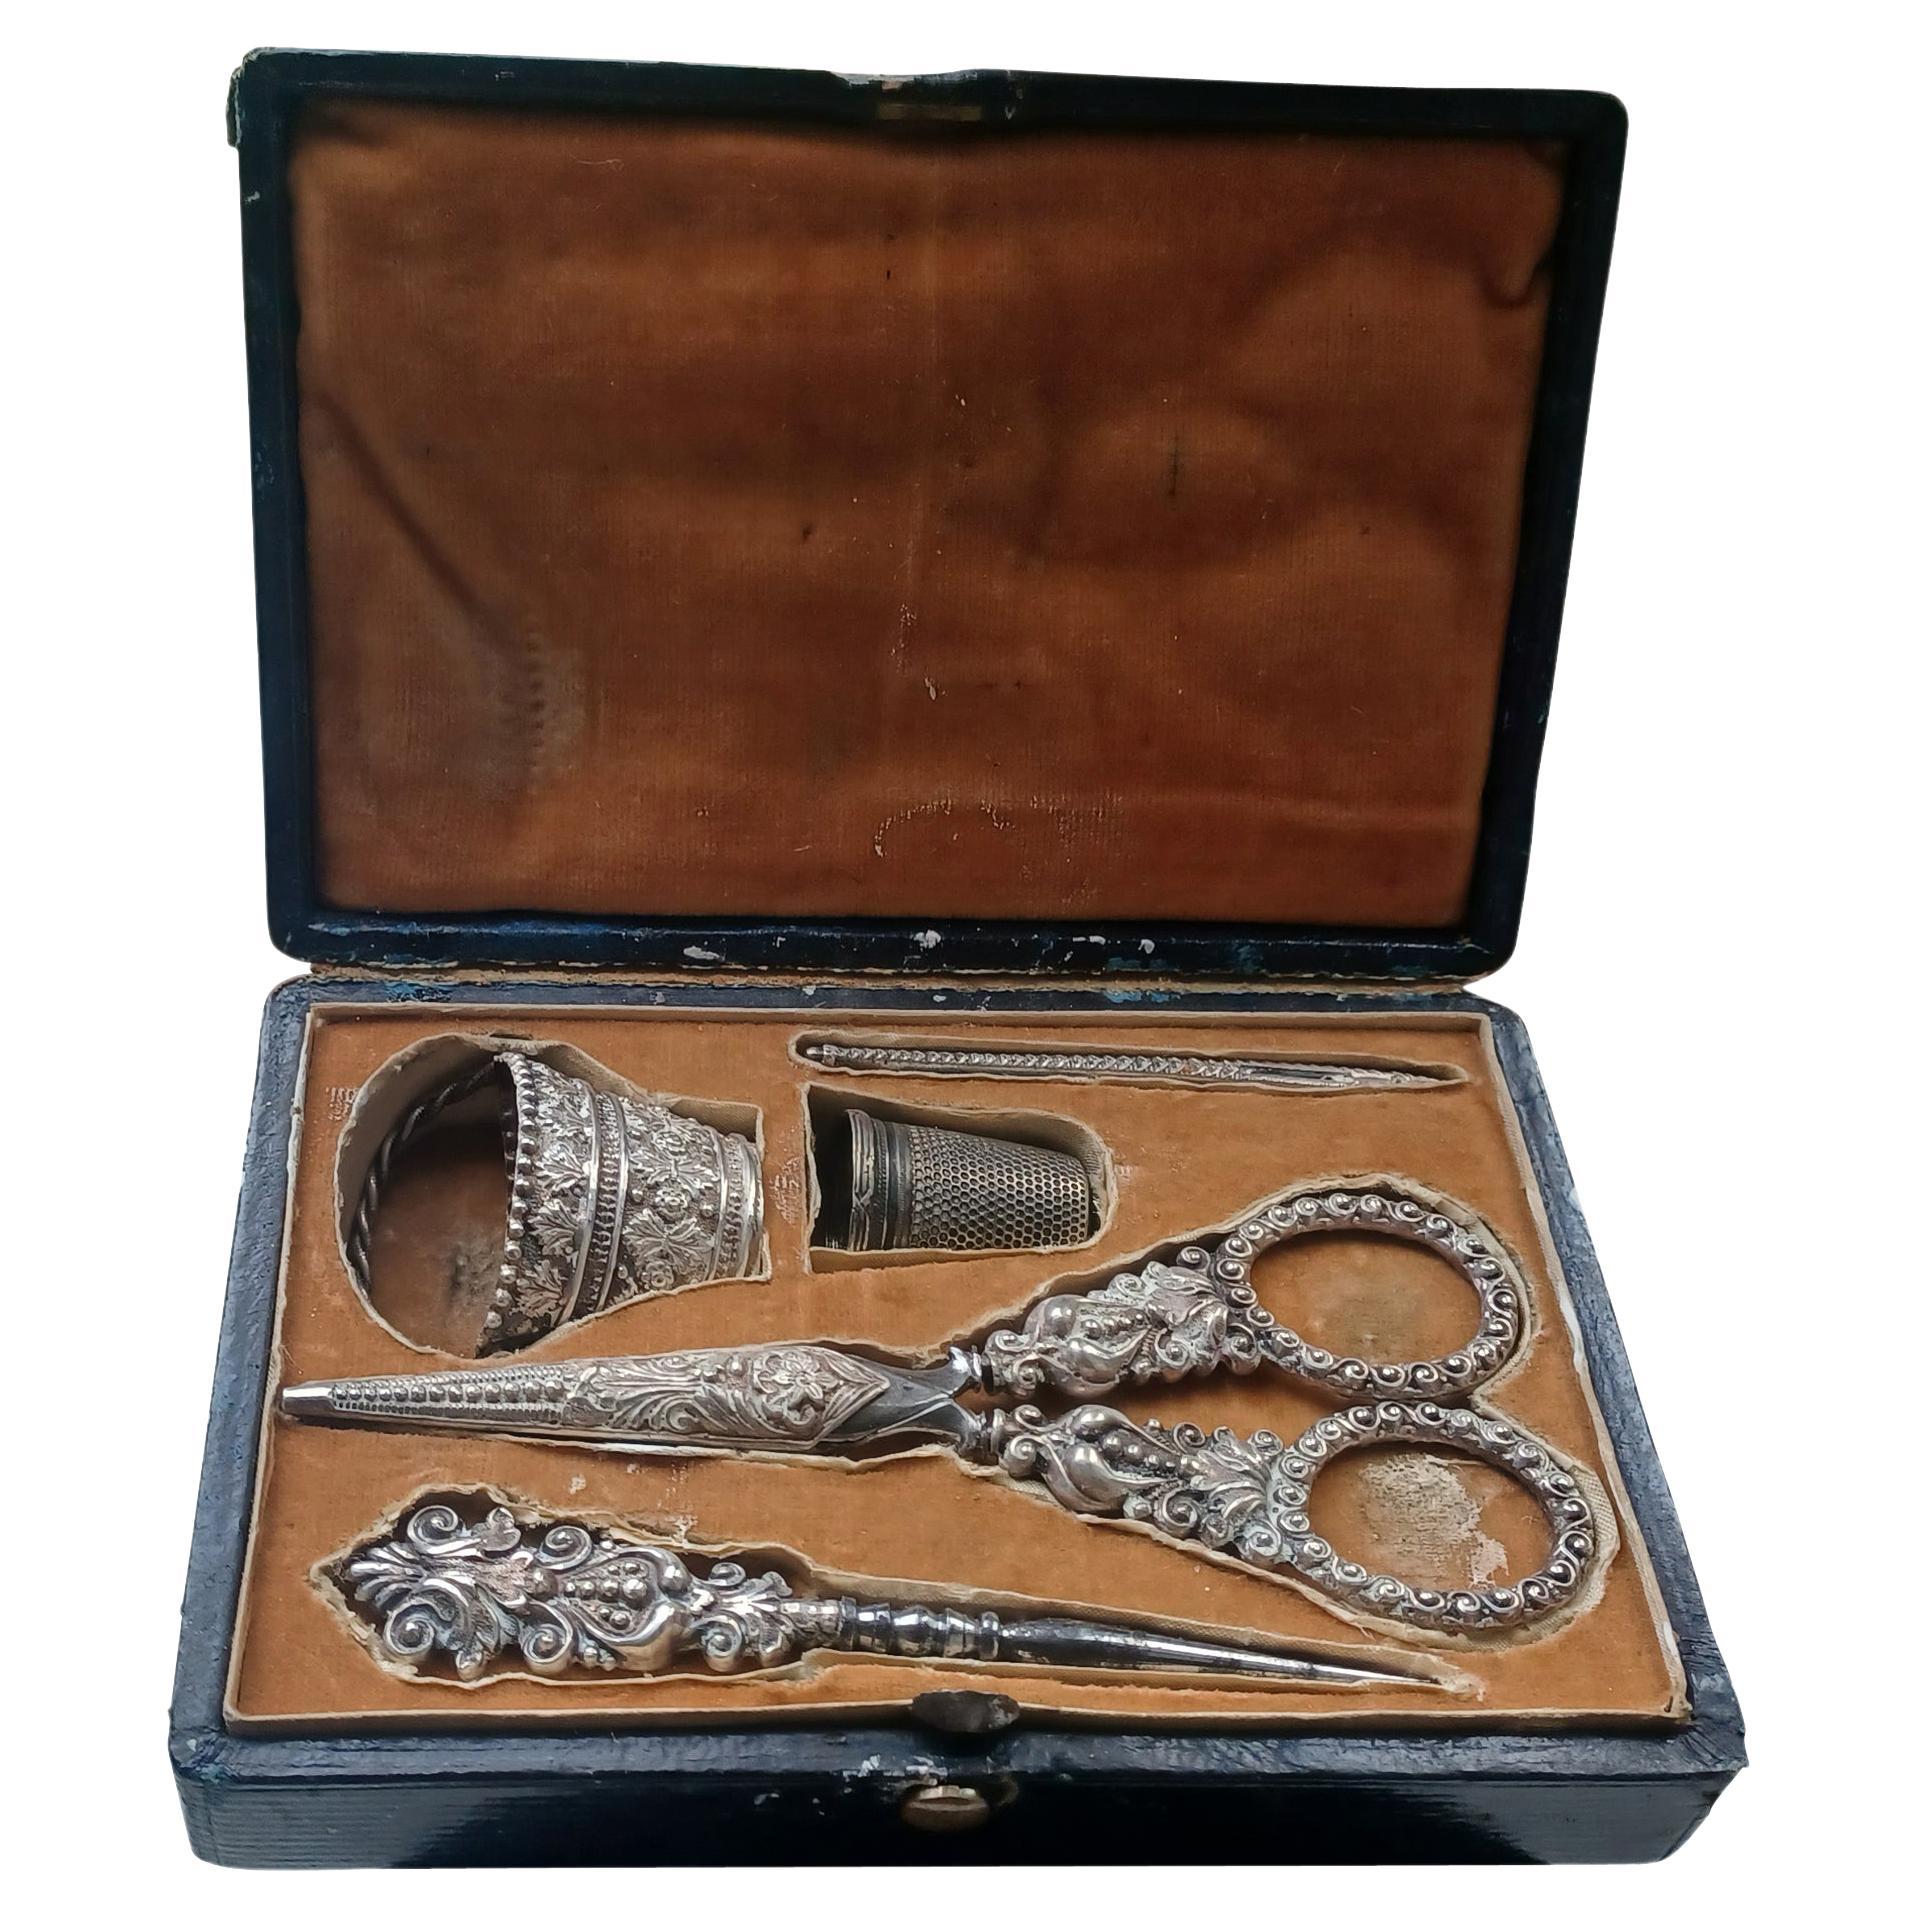 Rare Antique George IV Lady’s Sewing Necessaire with Original Case, est. 1825 For Sale